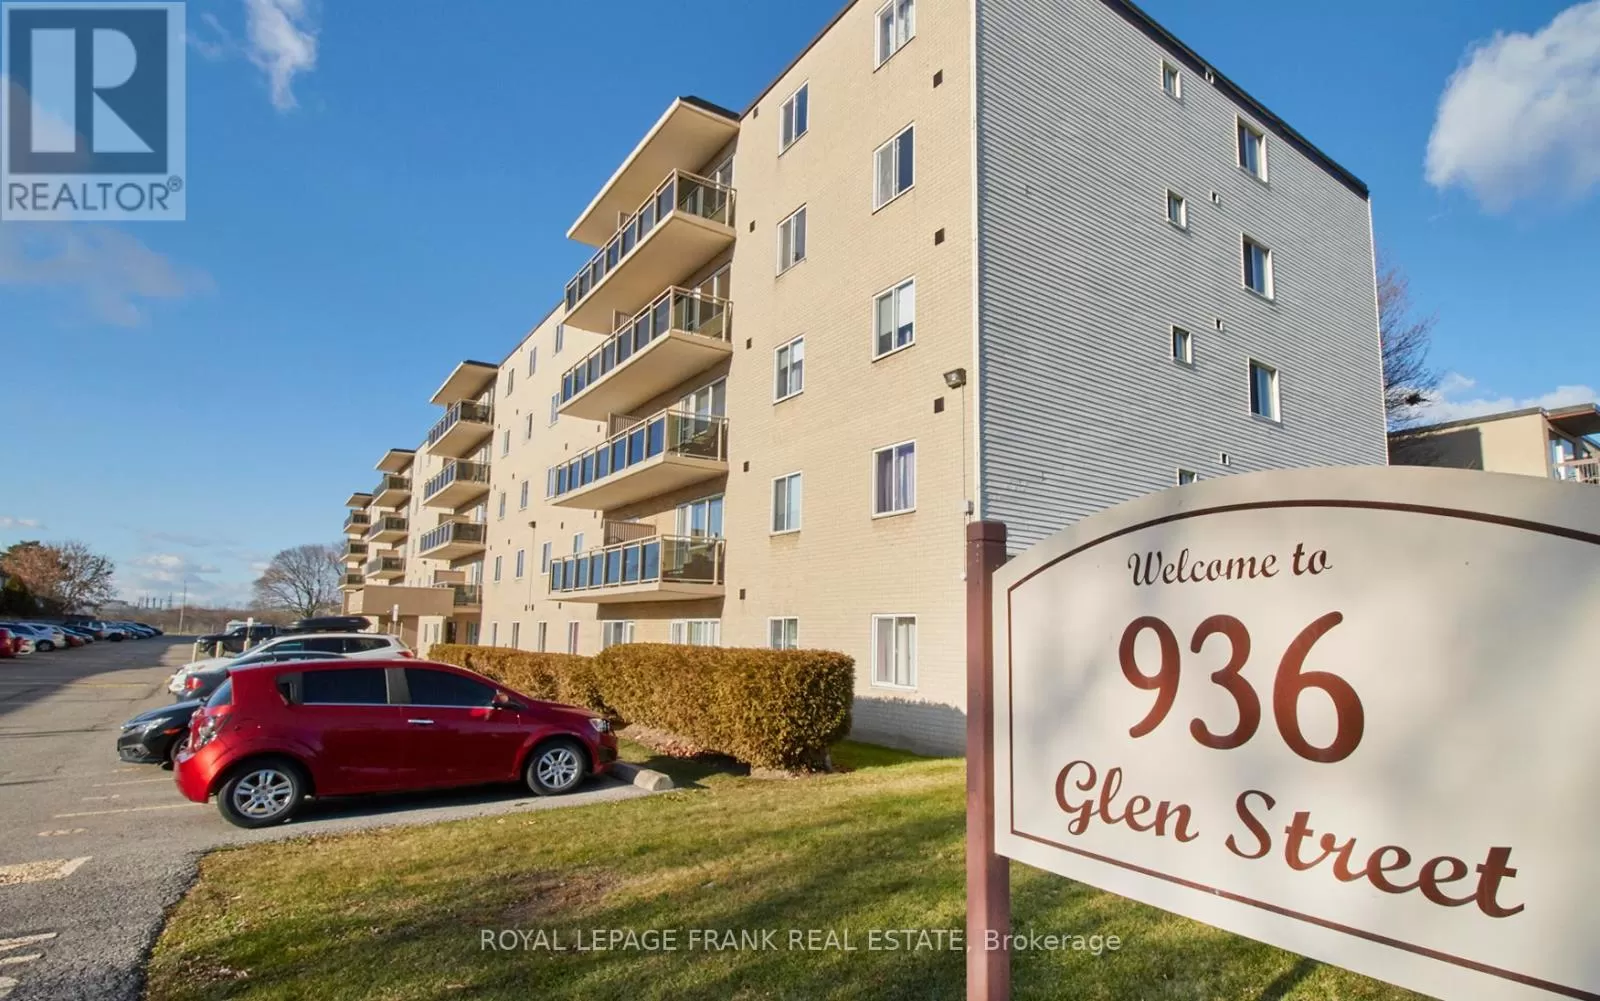 Apartment for rent: #411 -936 Glen St, Oshawa, Ontario L1J 5Z7